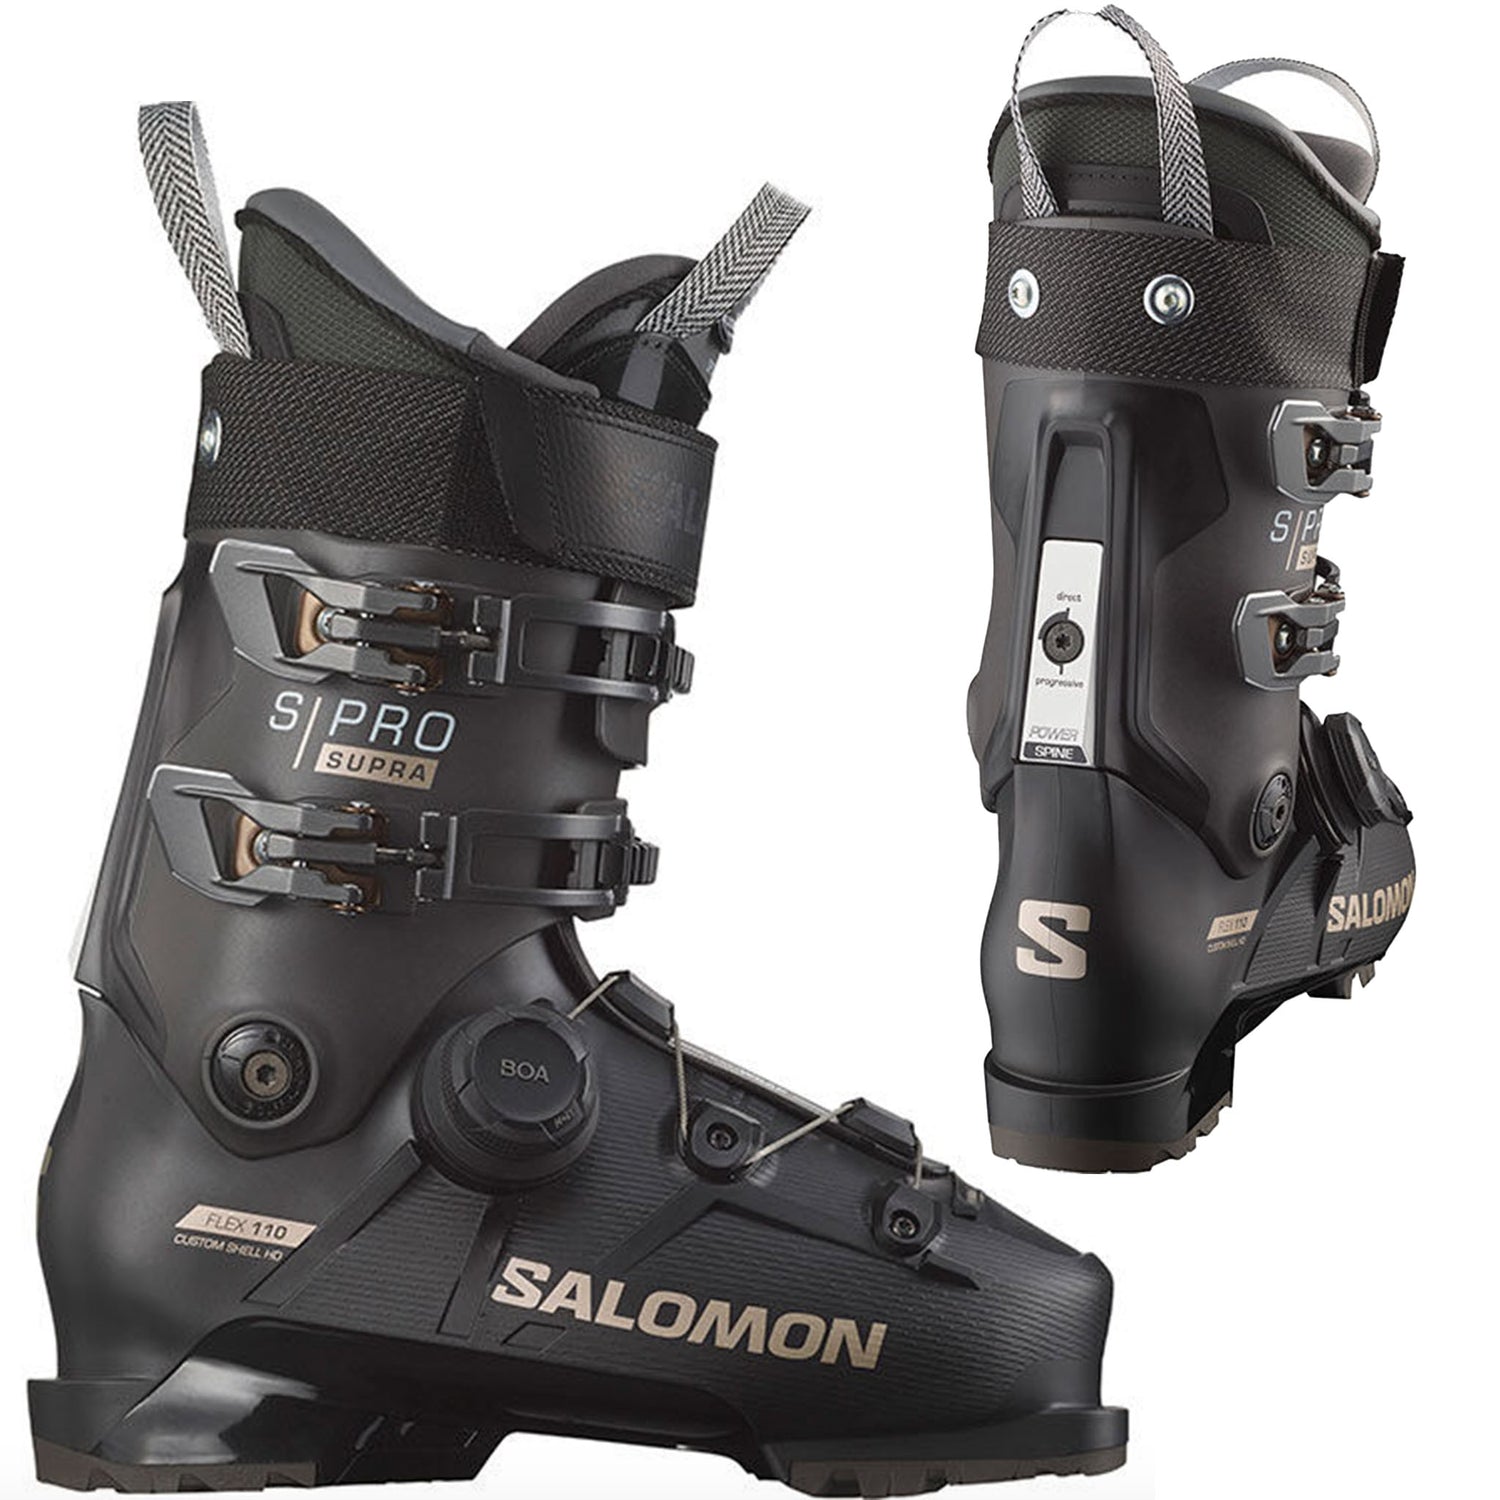 Salomon Men's S/Pro Supra BOA 110 Alpine Ski Boots